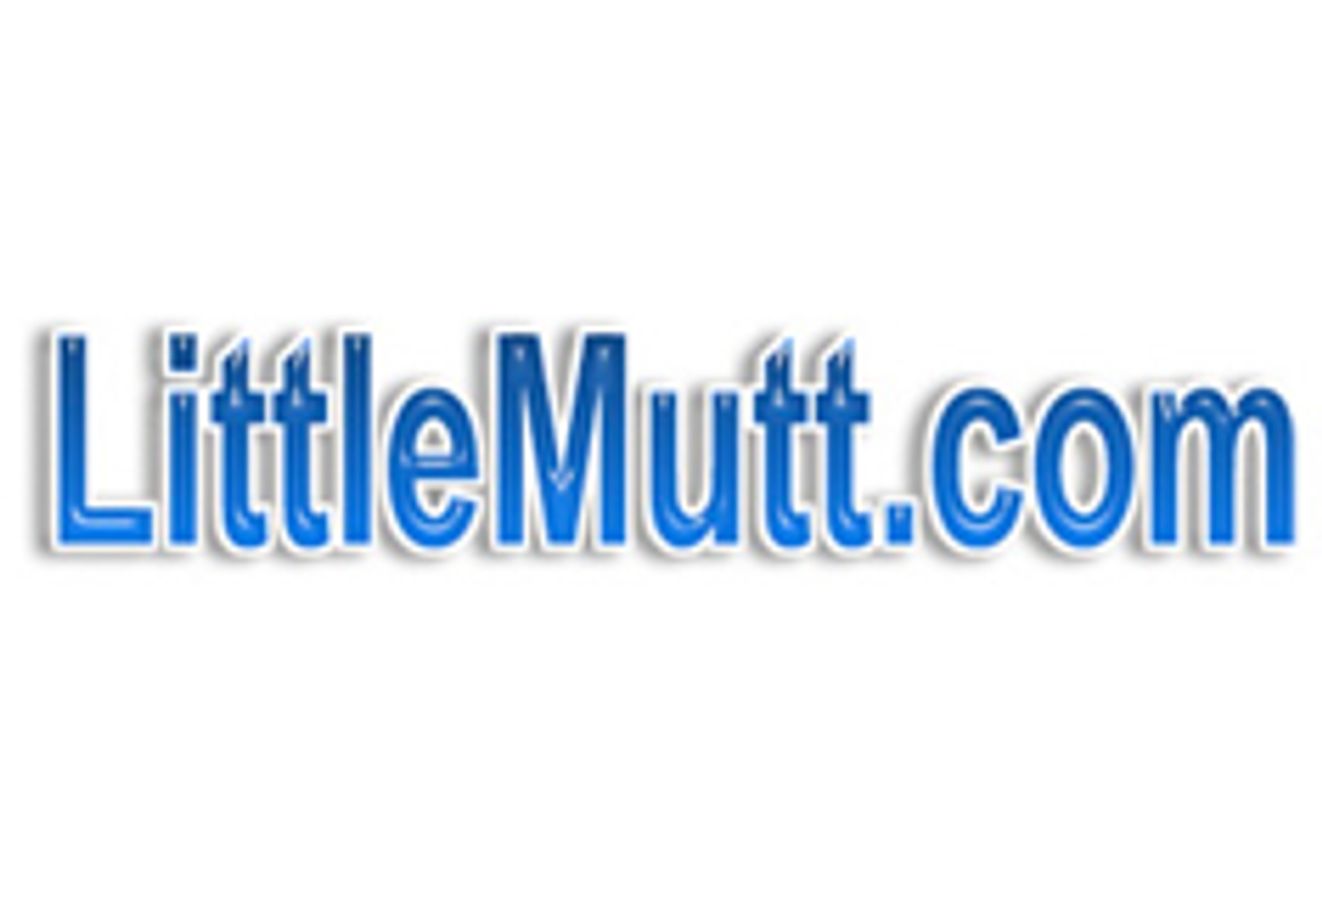 LittleMutt.com